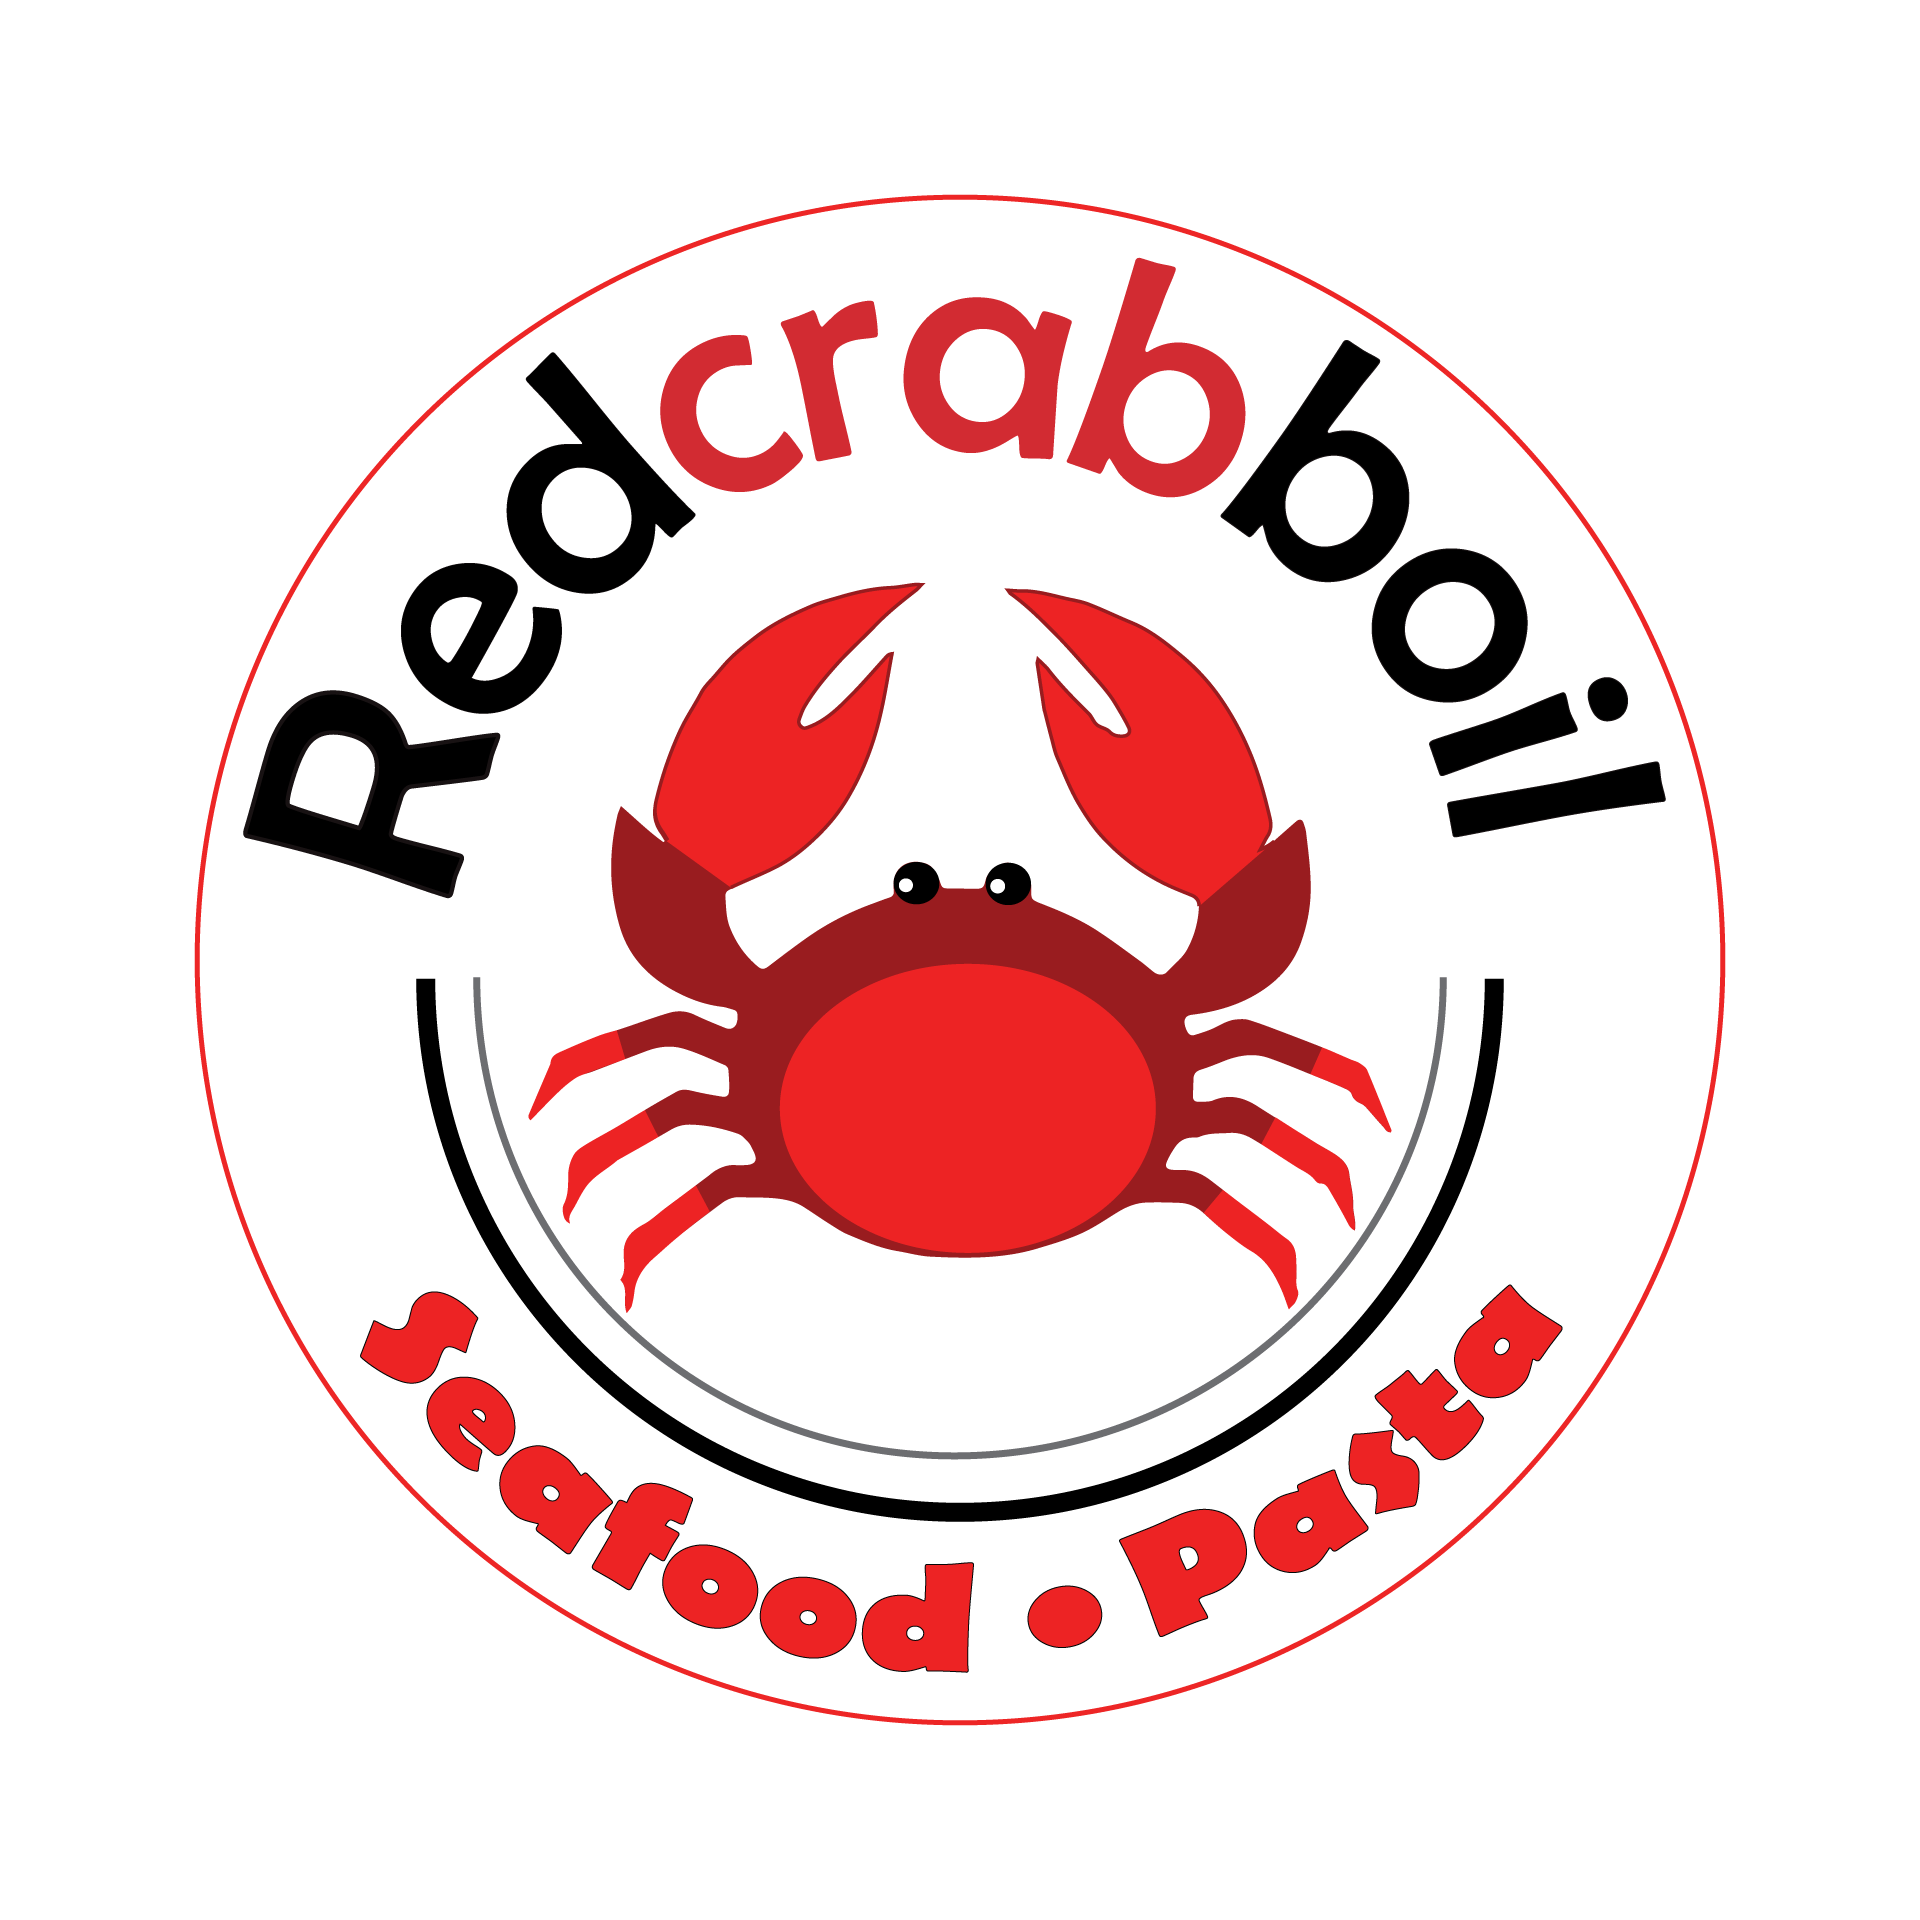 Red Crab Boil Seafood Pasta